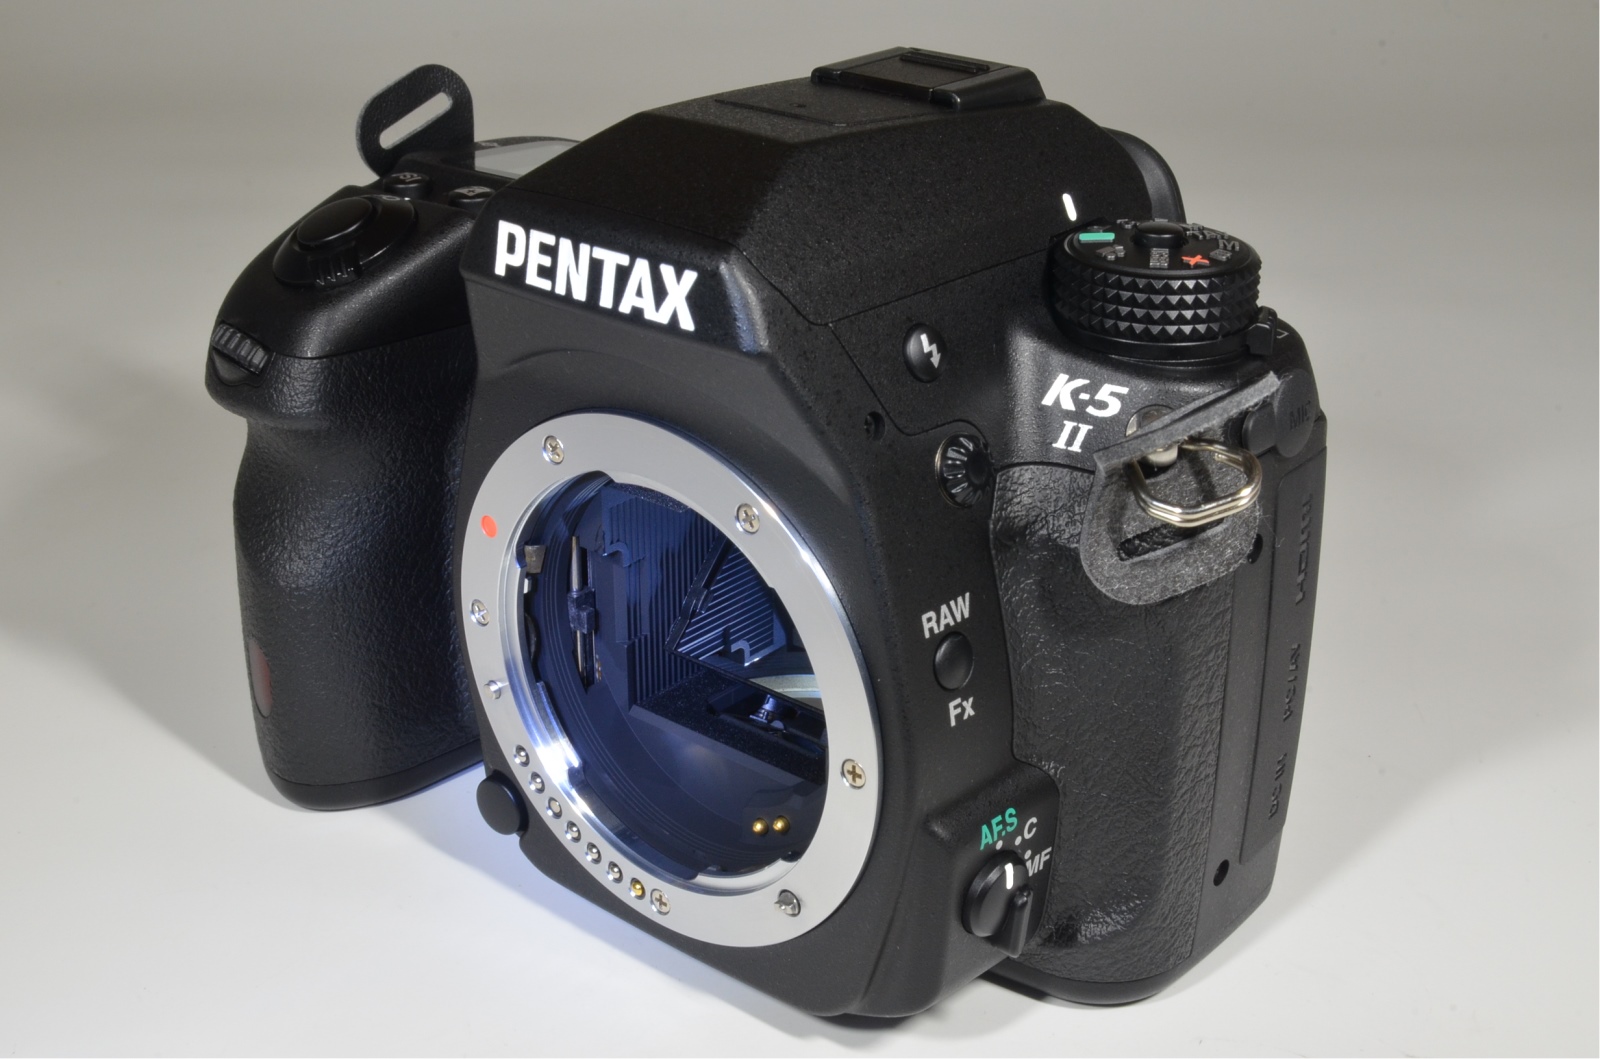 pentax k-5 ii with da 18-135mm f/3.5-5.6 ed al wr